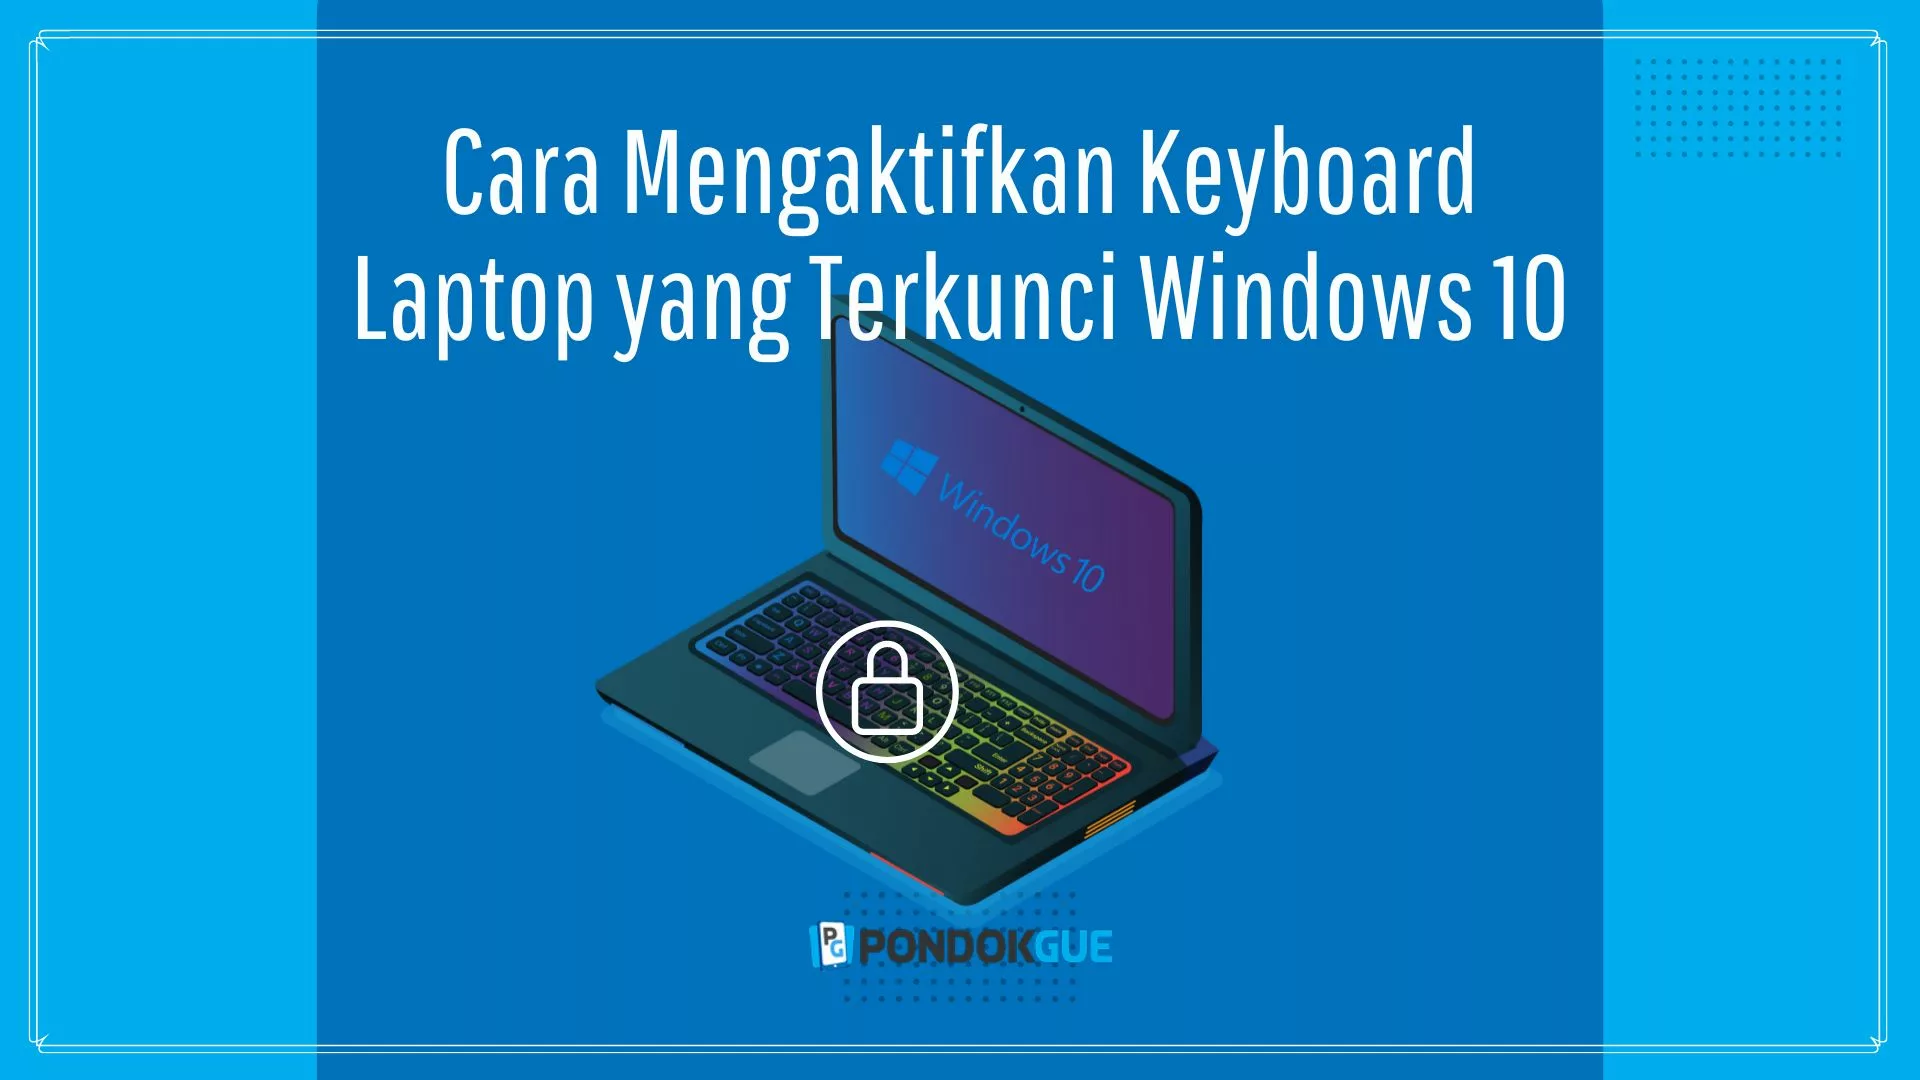 Cara Mengaktifkan Keyboard Laptop yang Terkunci Windows 10 - Pondokgue.com